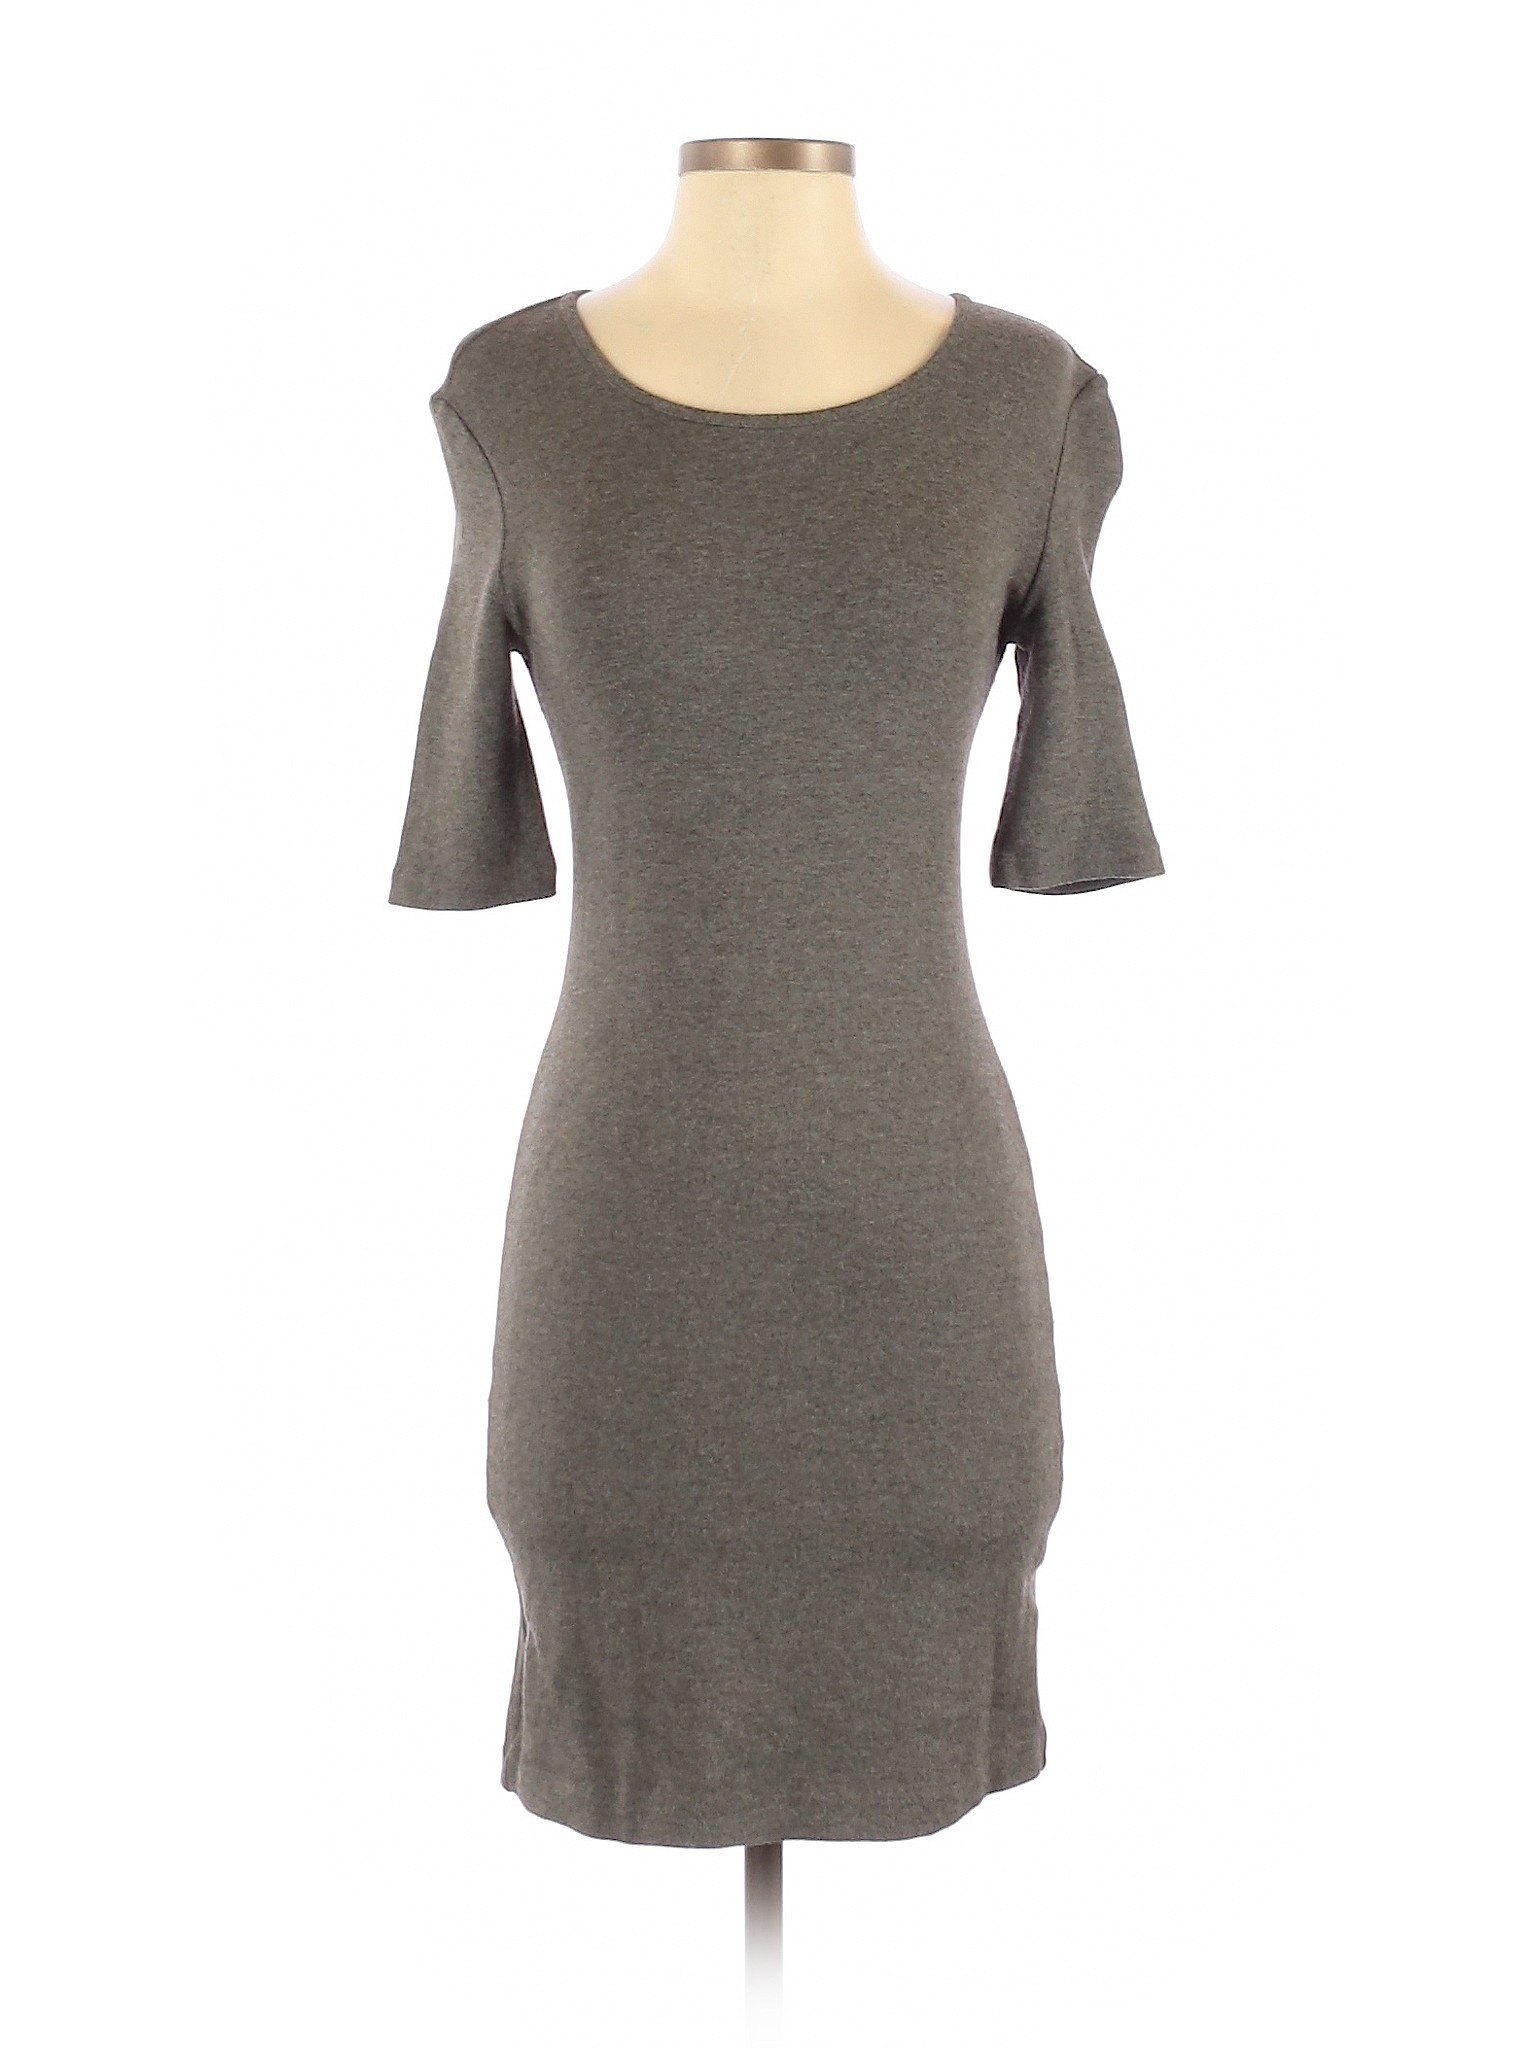 Philosophy Republic Clothing Women Gray Casual Dress XS | eBay